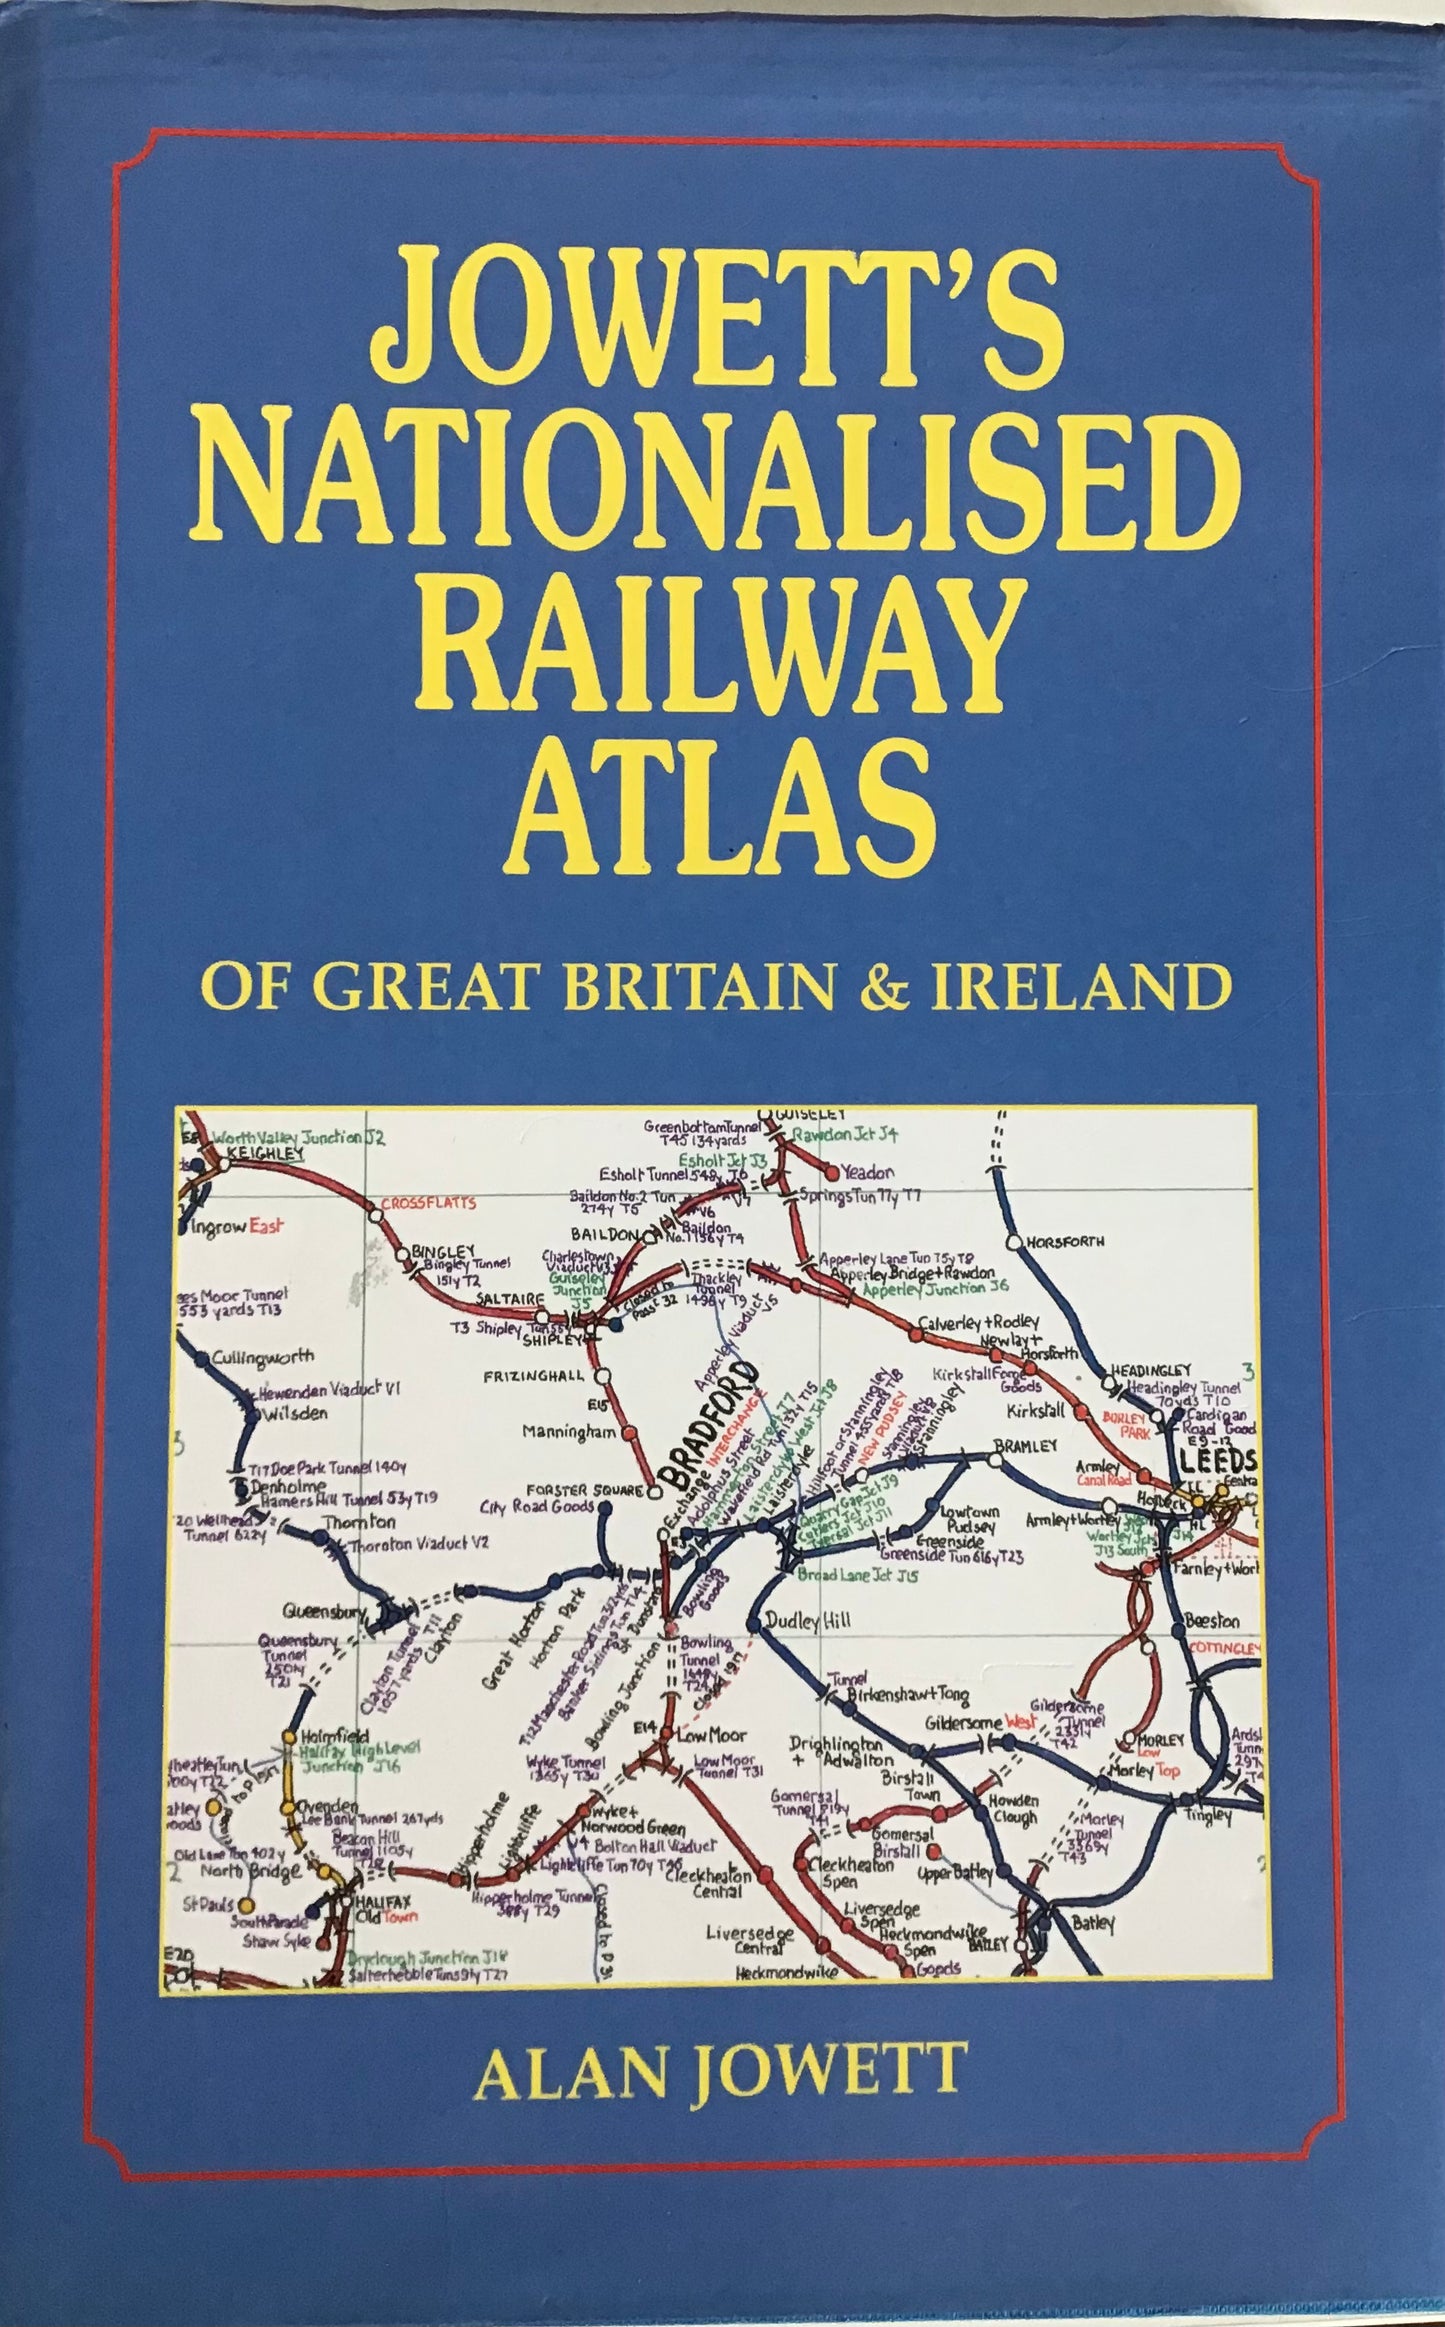 Jowett’s Nationalised Railway Atlas of Great Britain & Ireland - Chester Model Centre